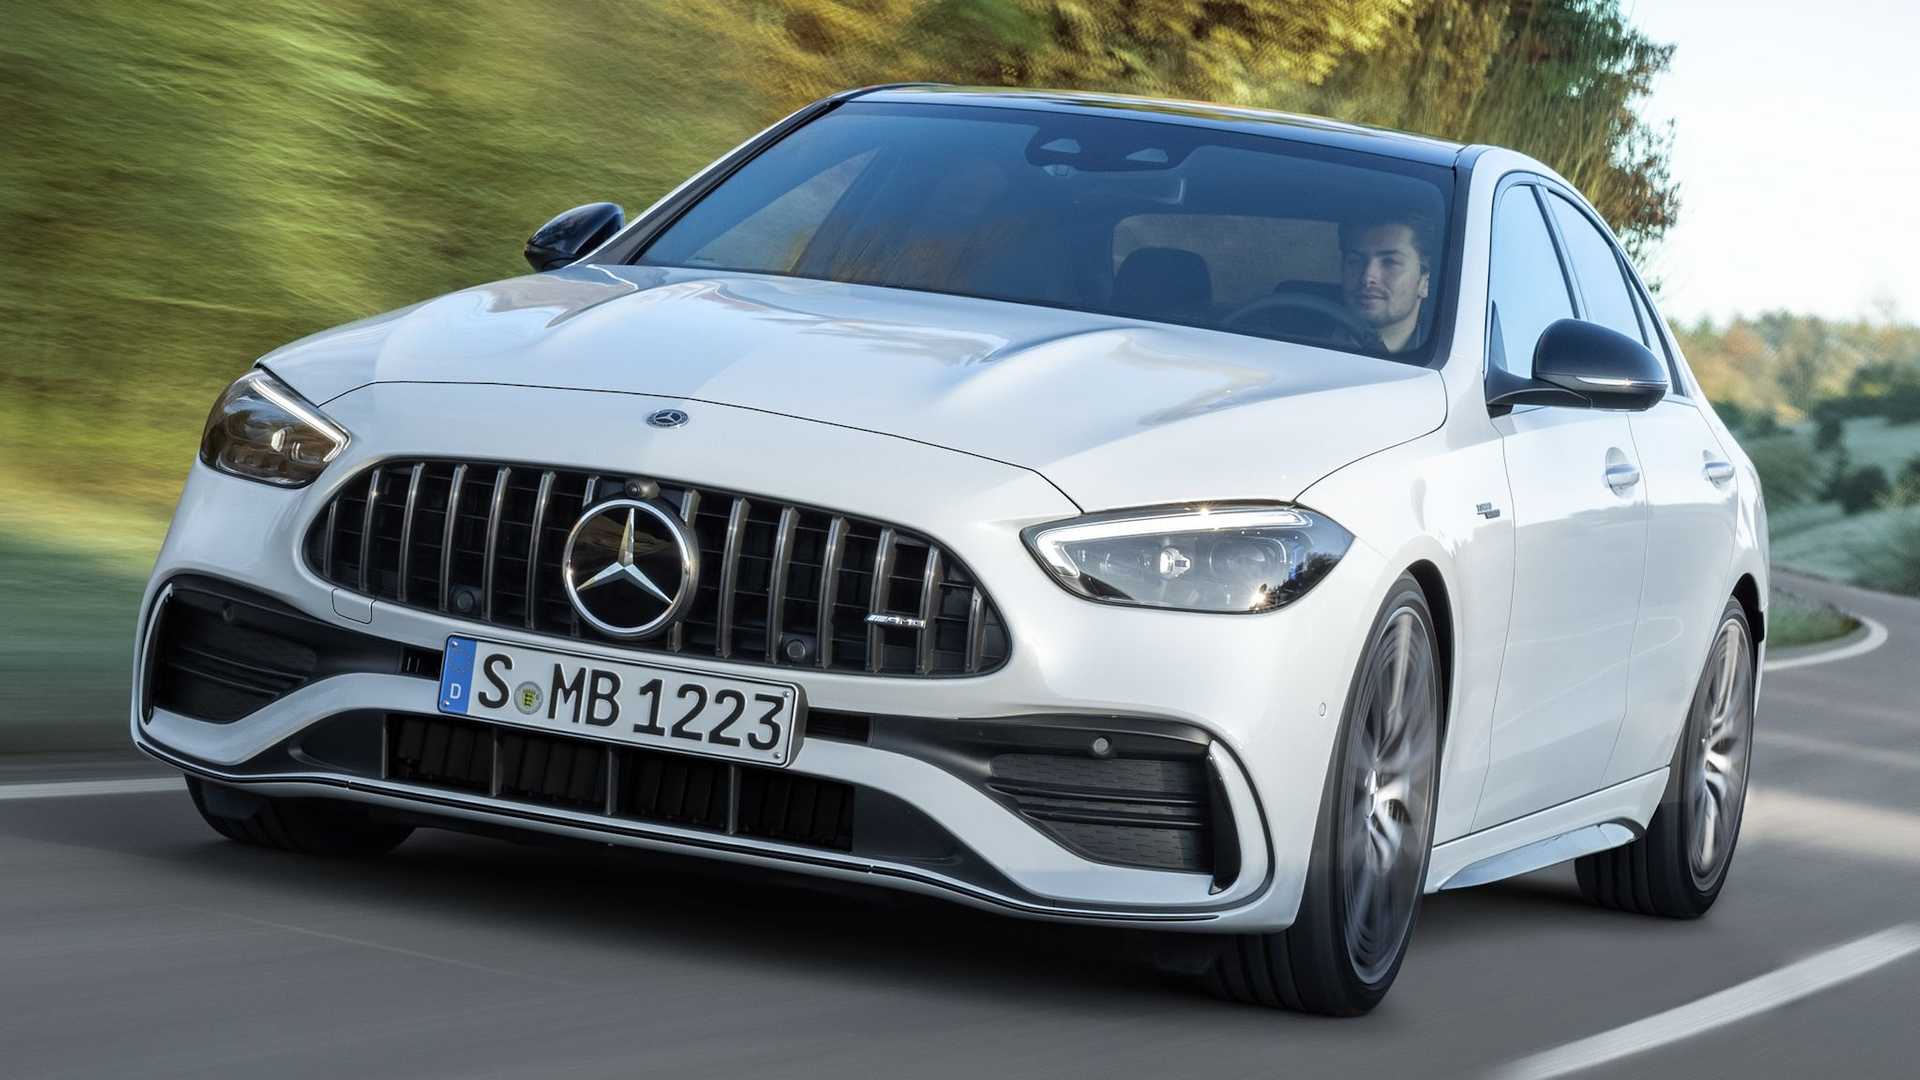 Lançamentos da Mercedes para 2023 Confira novidades previstas para o